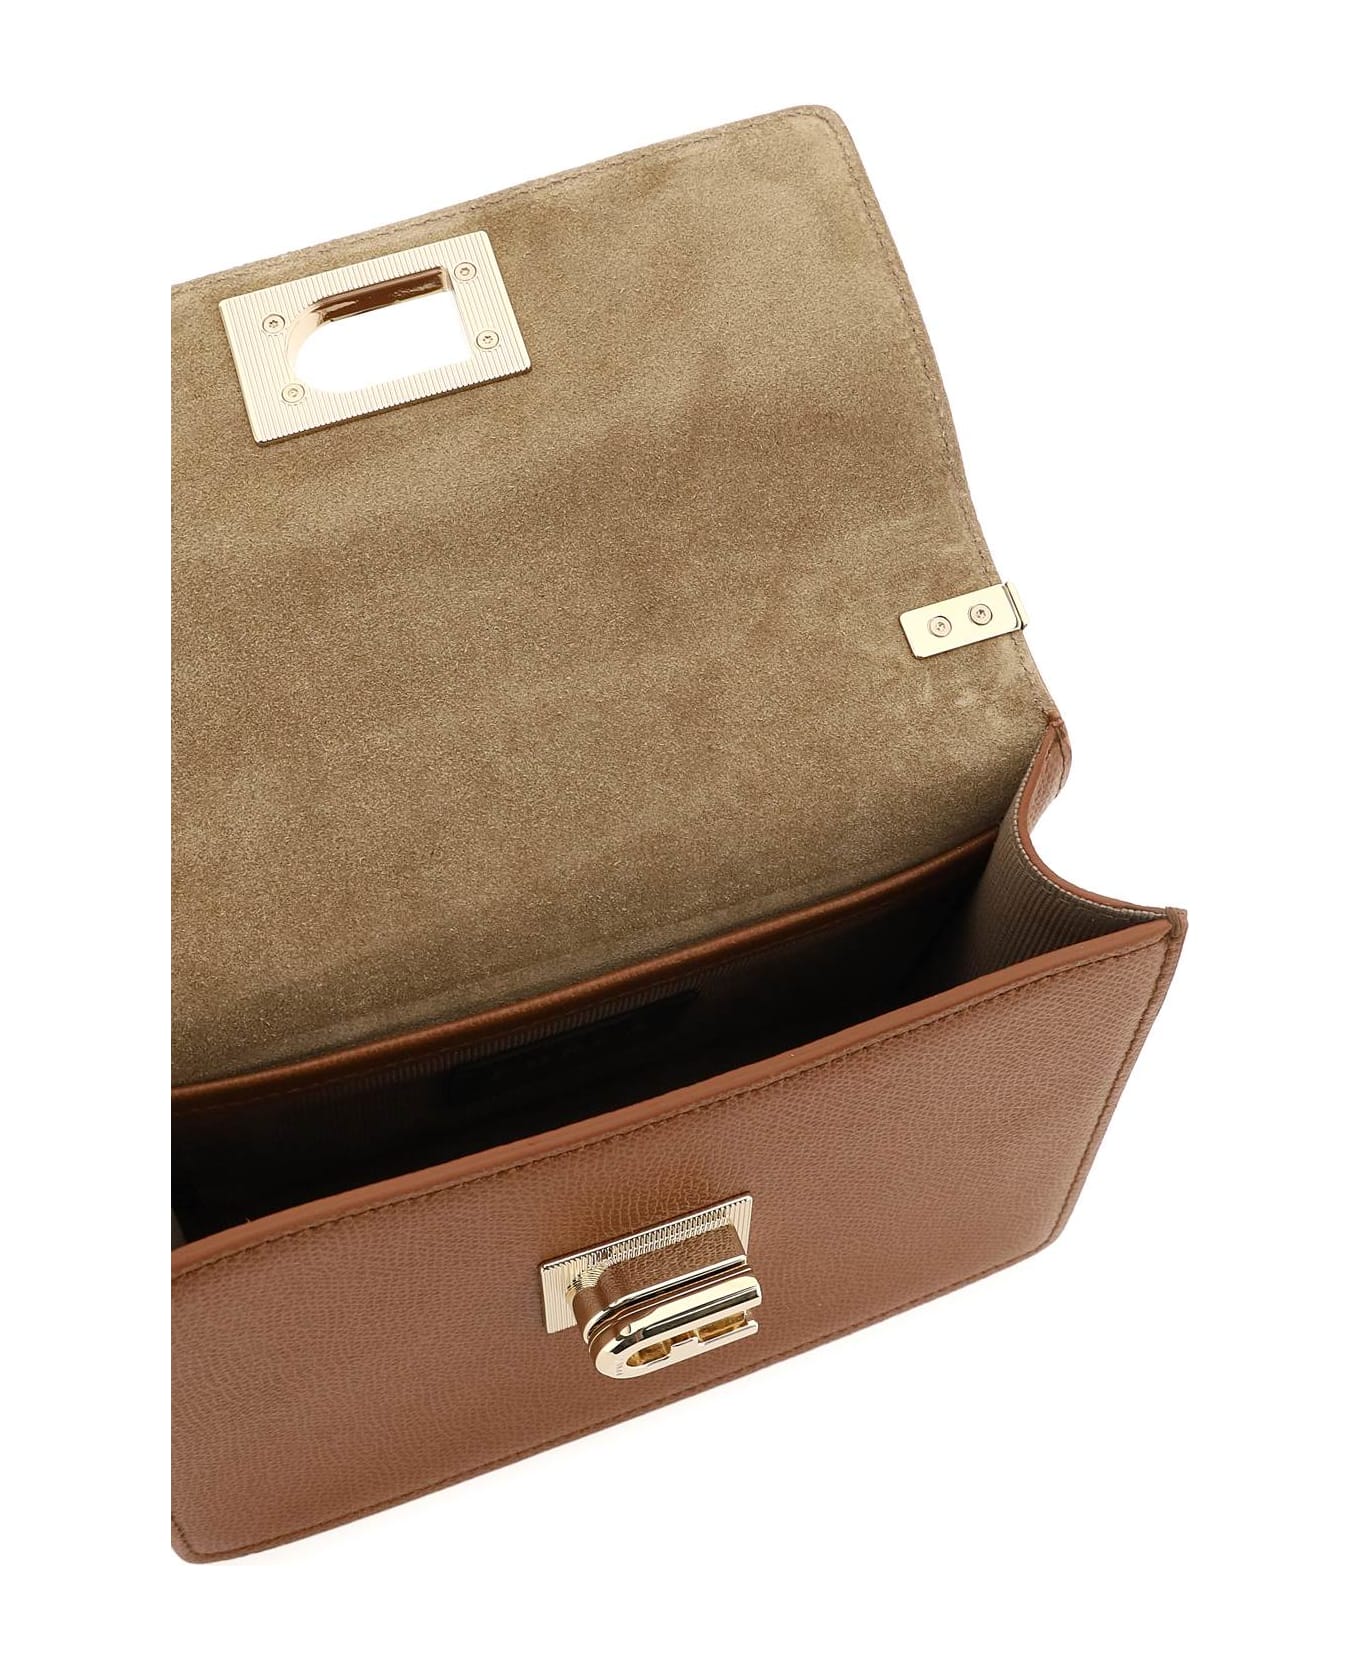 Furla 1927 Brown Leather Crossbody Bag - Brown